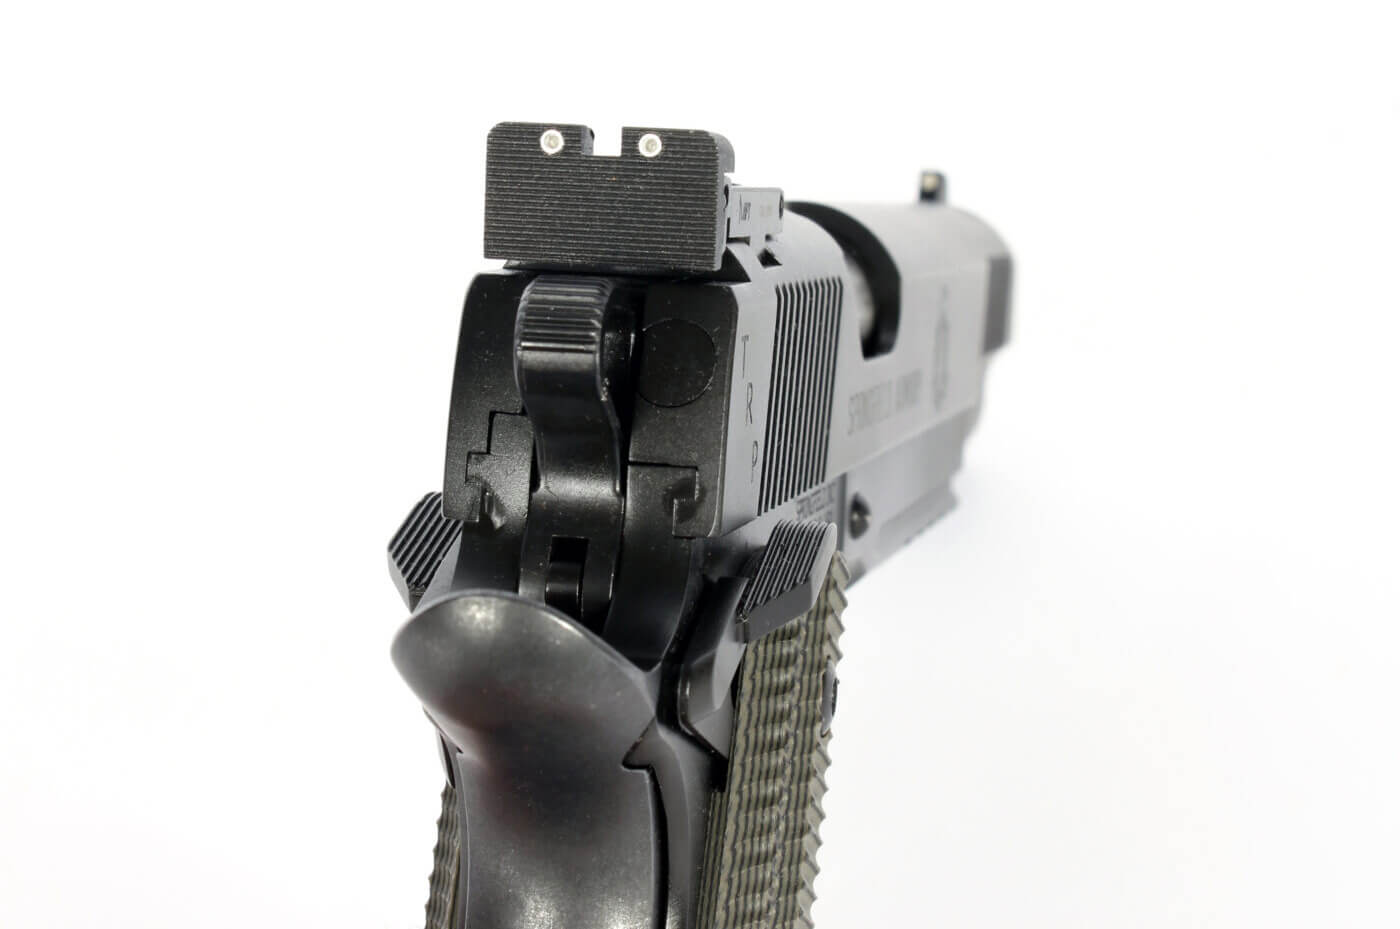 Adjustable night sights on Springfield Armory 1911 pistol